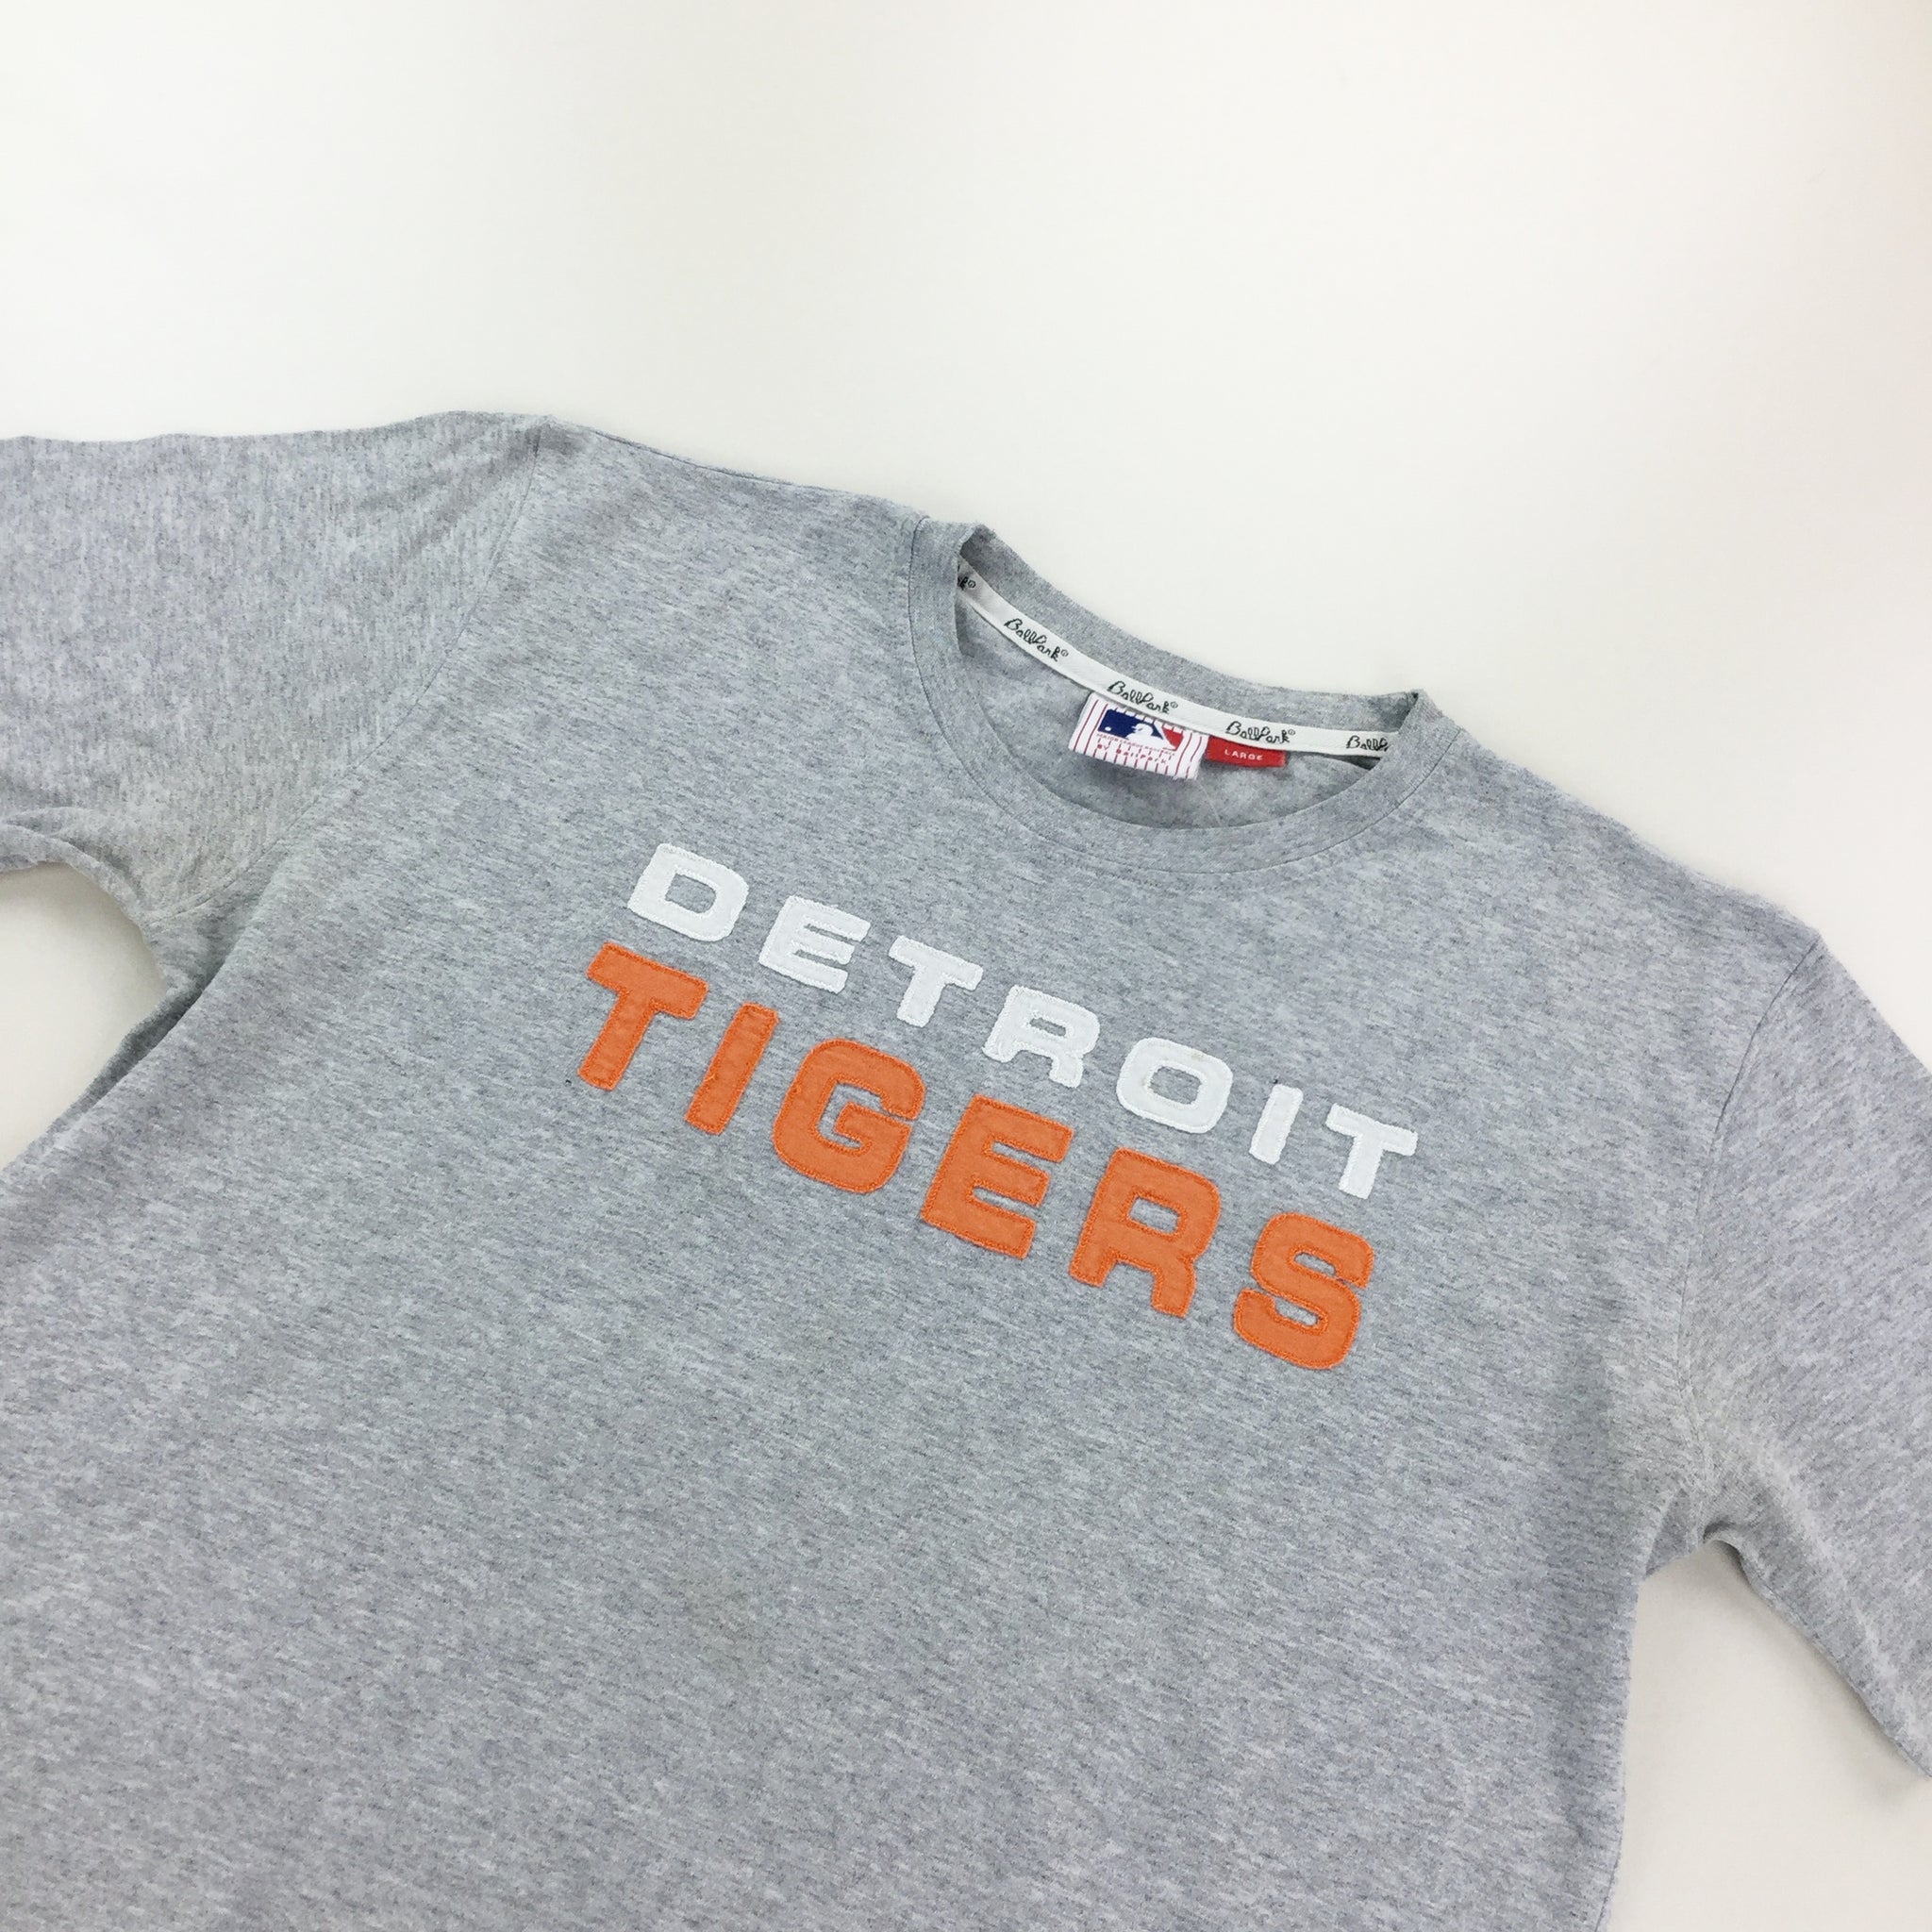 Vintage Detroit Tigers Tee Shirt